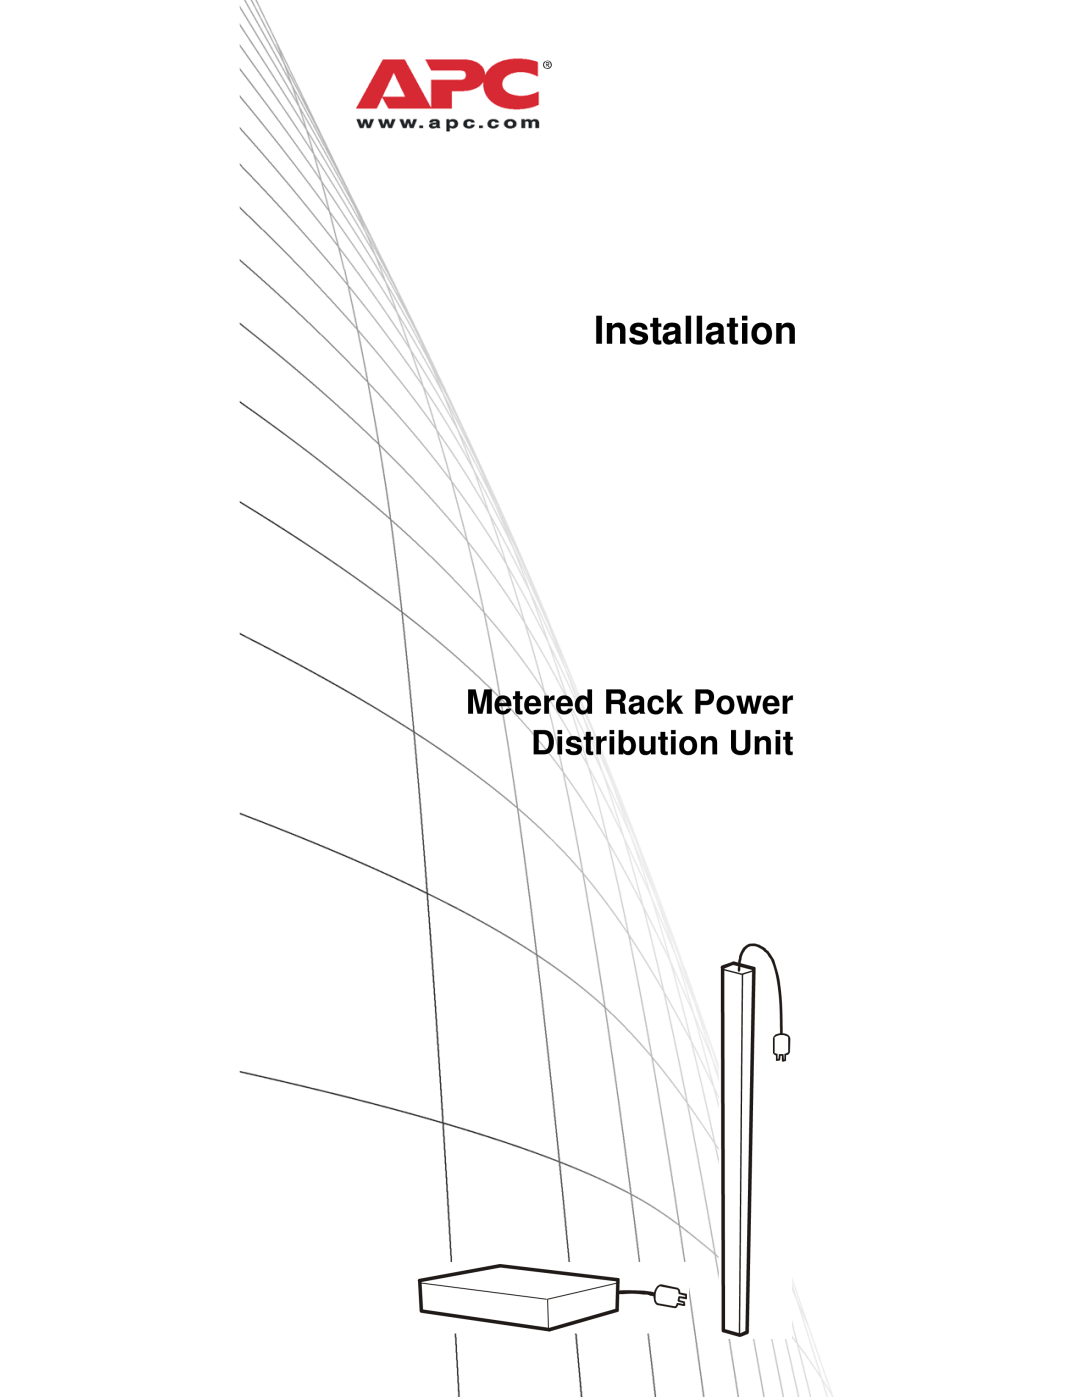 APC pdu0123b, AP7820 manual Installation, Metered Rack Power Distribution Unit 